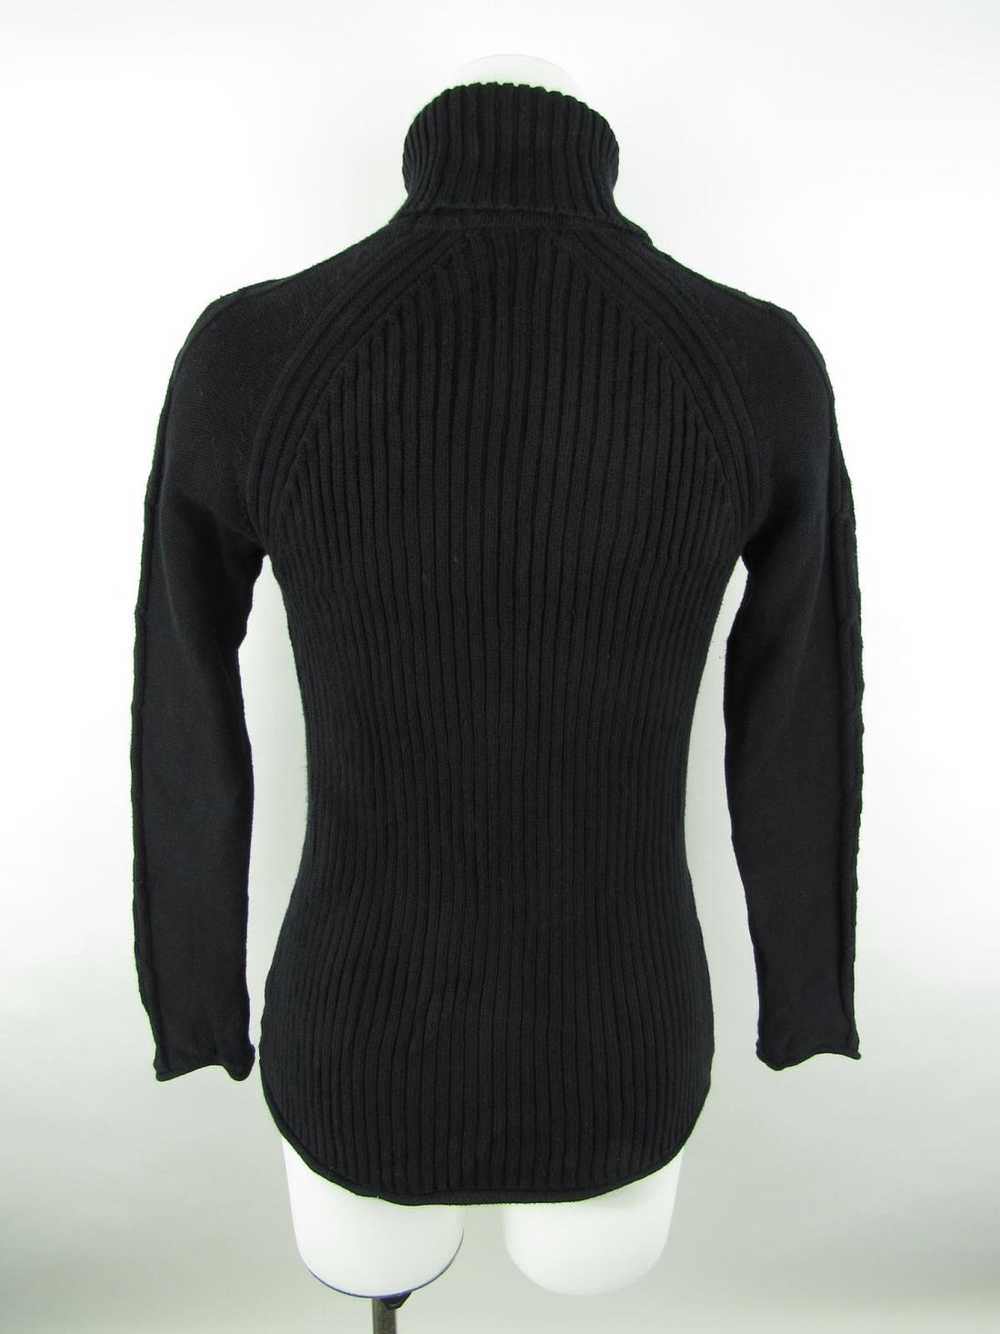 Style & co Turtleneck Sweater - image 2